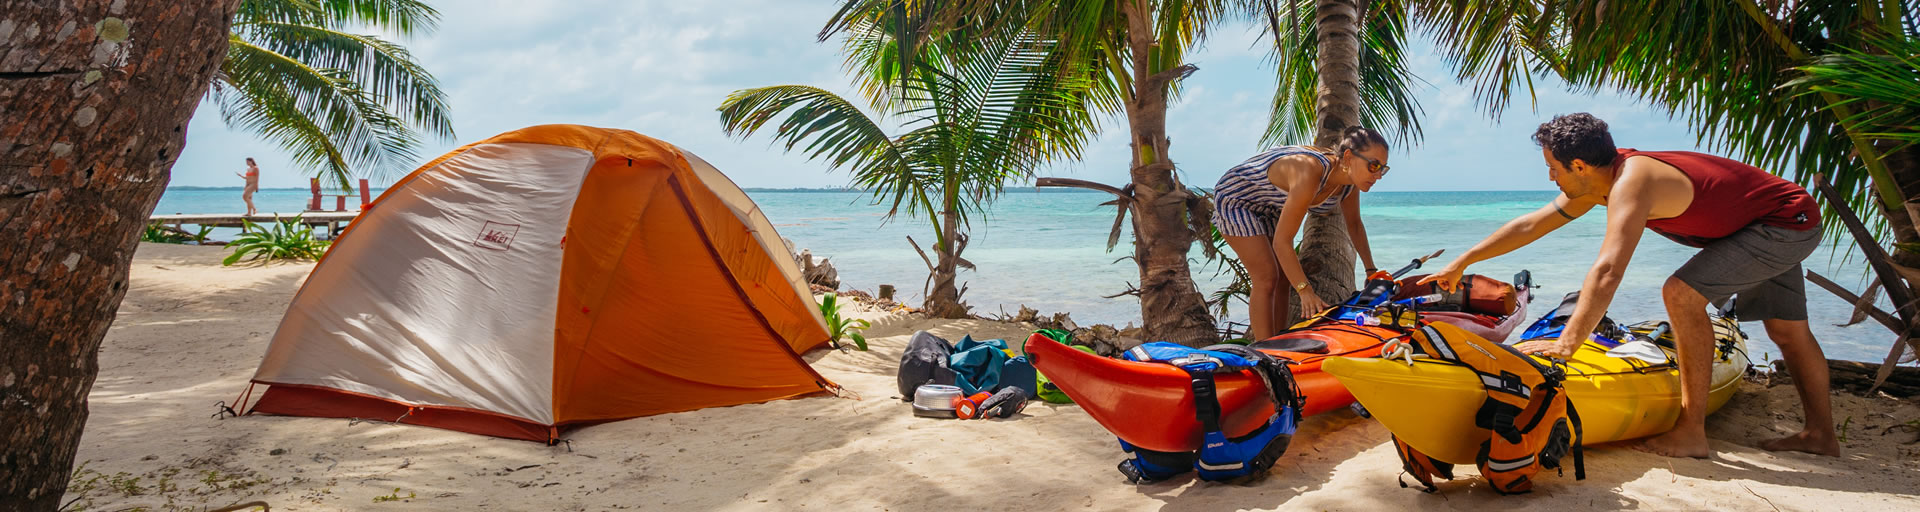 Sea Kayak Camping in Belize - Kayak Rentals in Belize